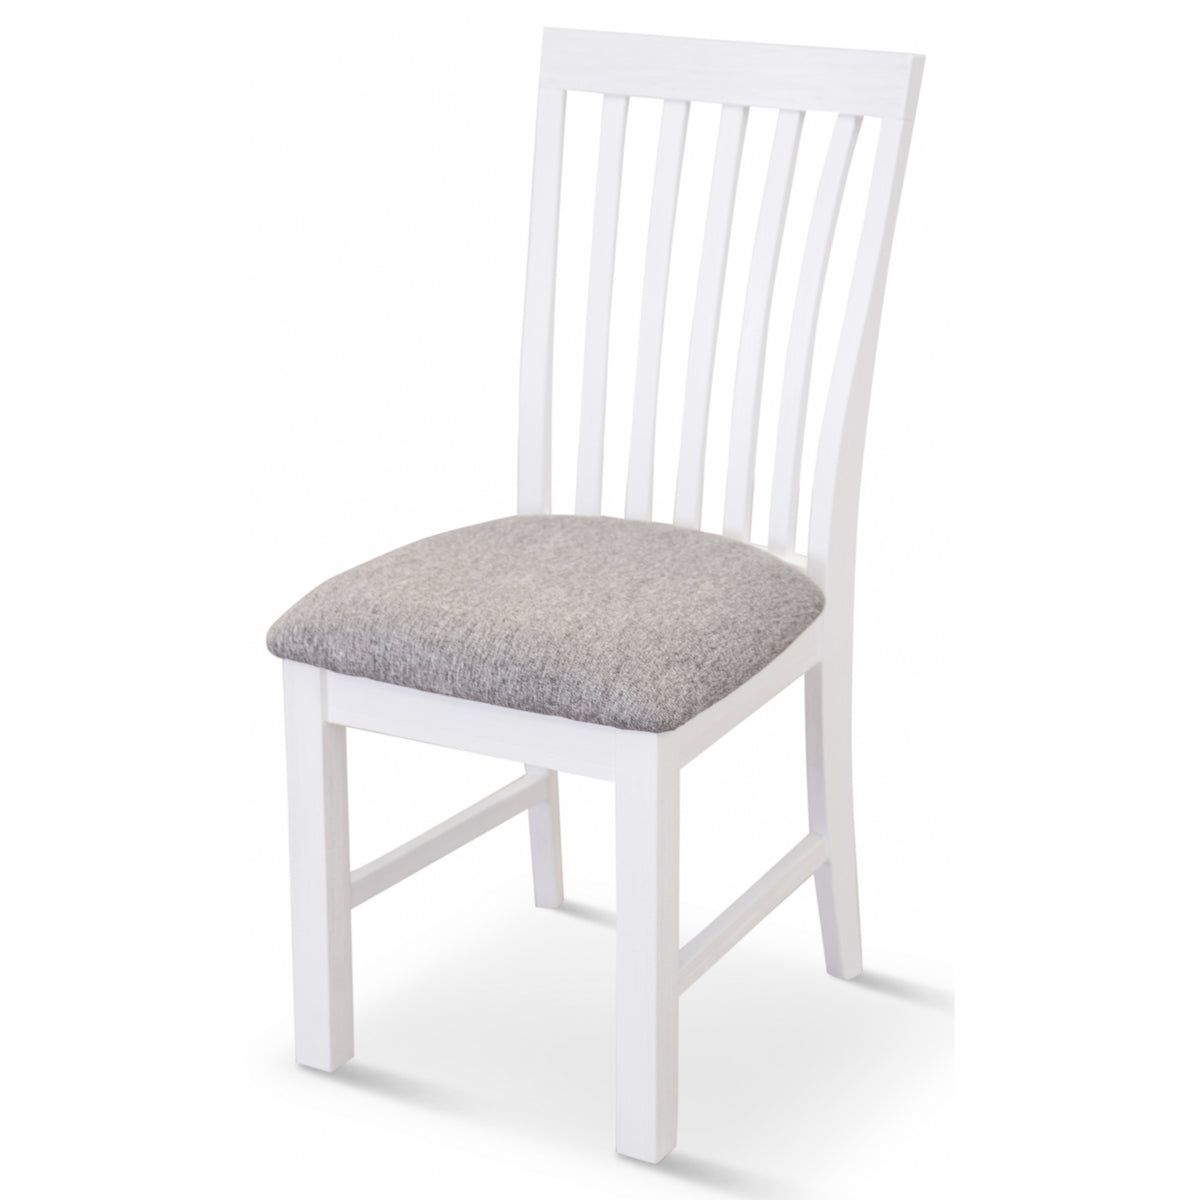 Laelia Dining Chair Set of 2 Solid Acacia Timber Wood Coastal Furniture - White